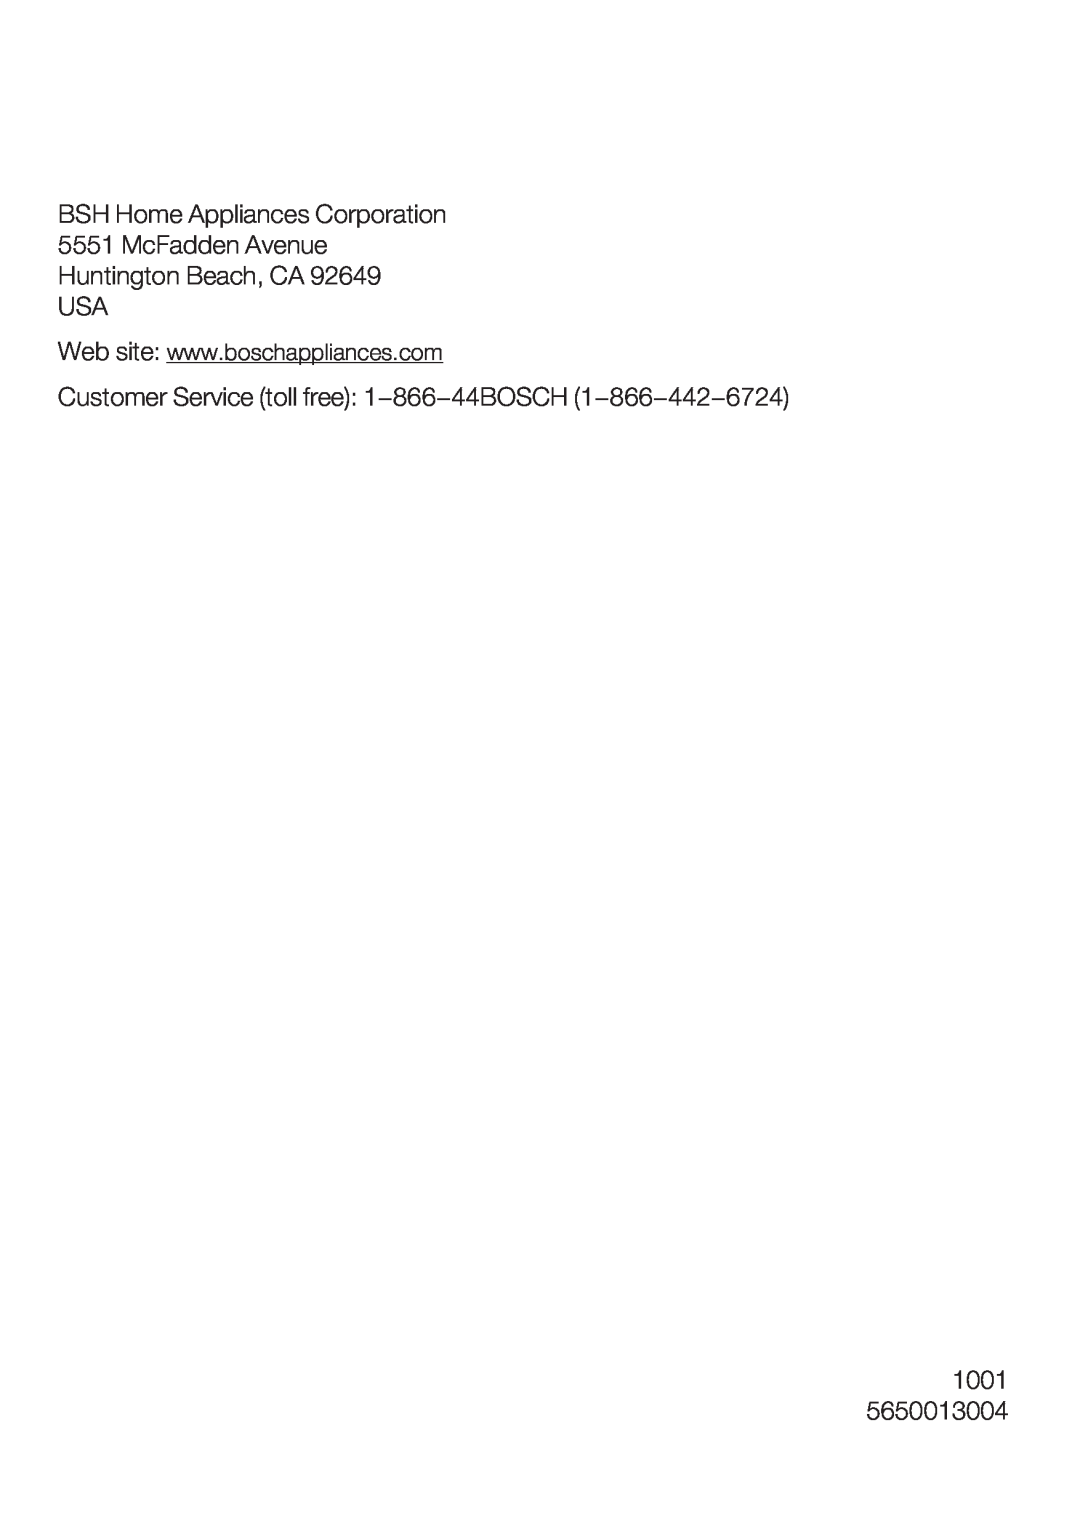 Bosch Appliances TKA280, 283UC BSH Home Appliances Corporation, McFadden Avenue Huntington Beach, CA USA, 1001 5650013004 